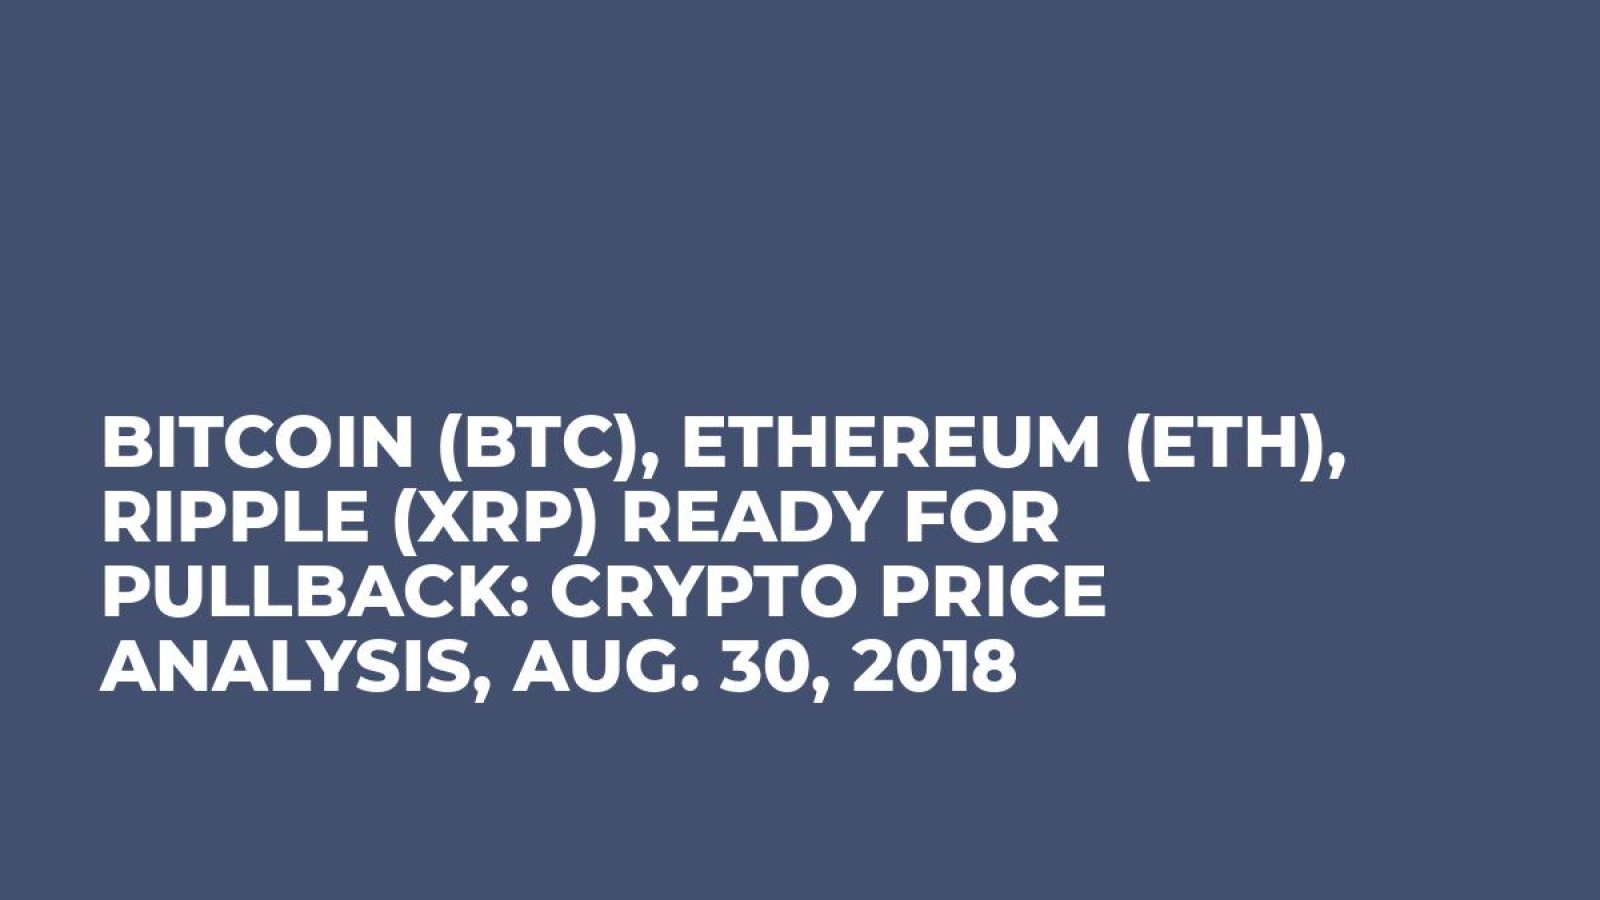 Bitcoin (BTC), Ethereum (ETH), Ripple (XRP) Ready For Pullback: Crypto Price Analysis, Aug. 30, 2018